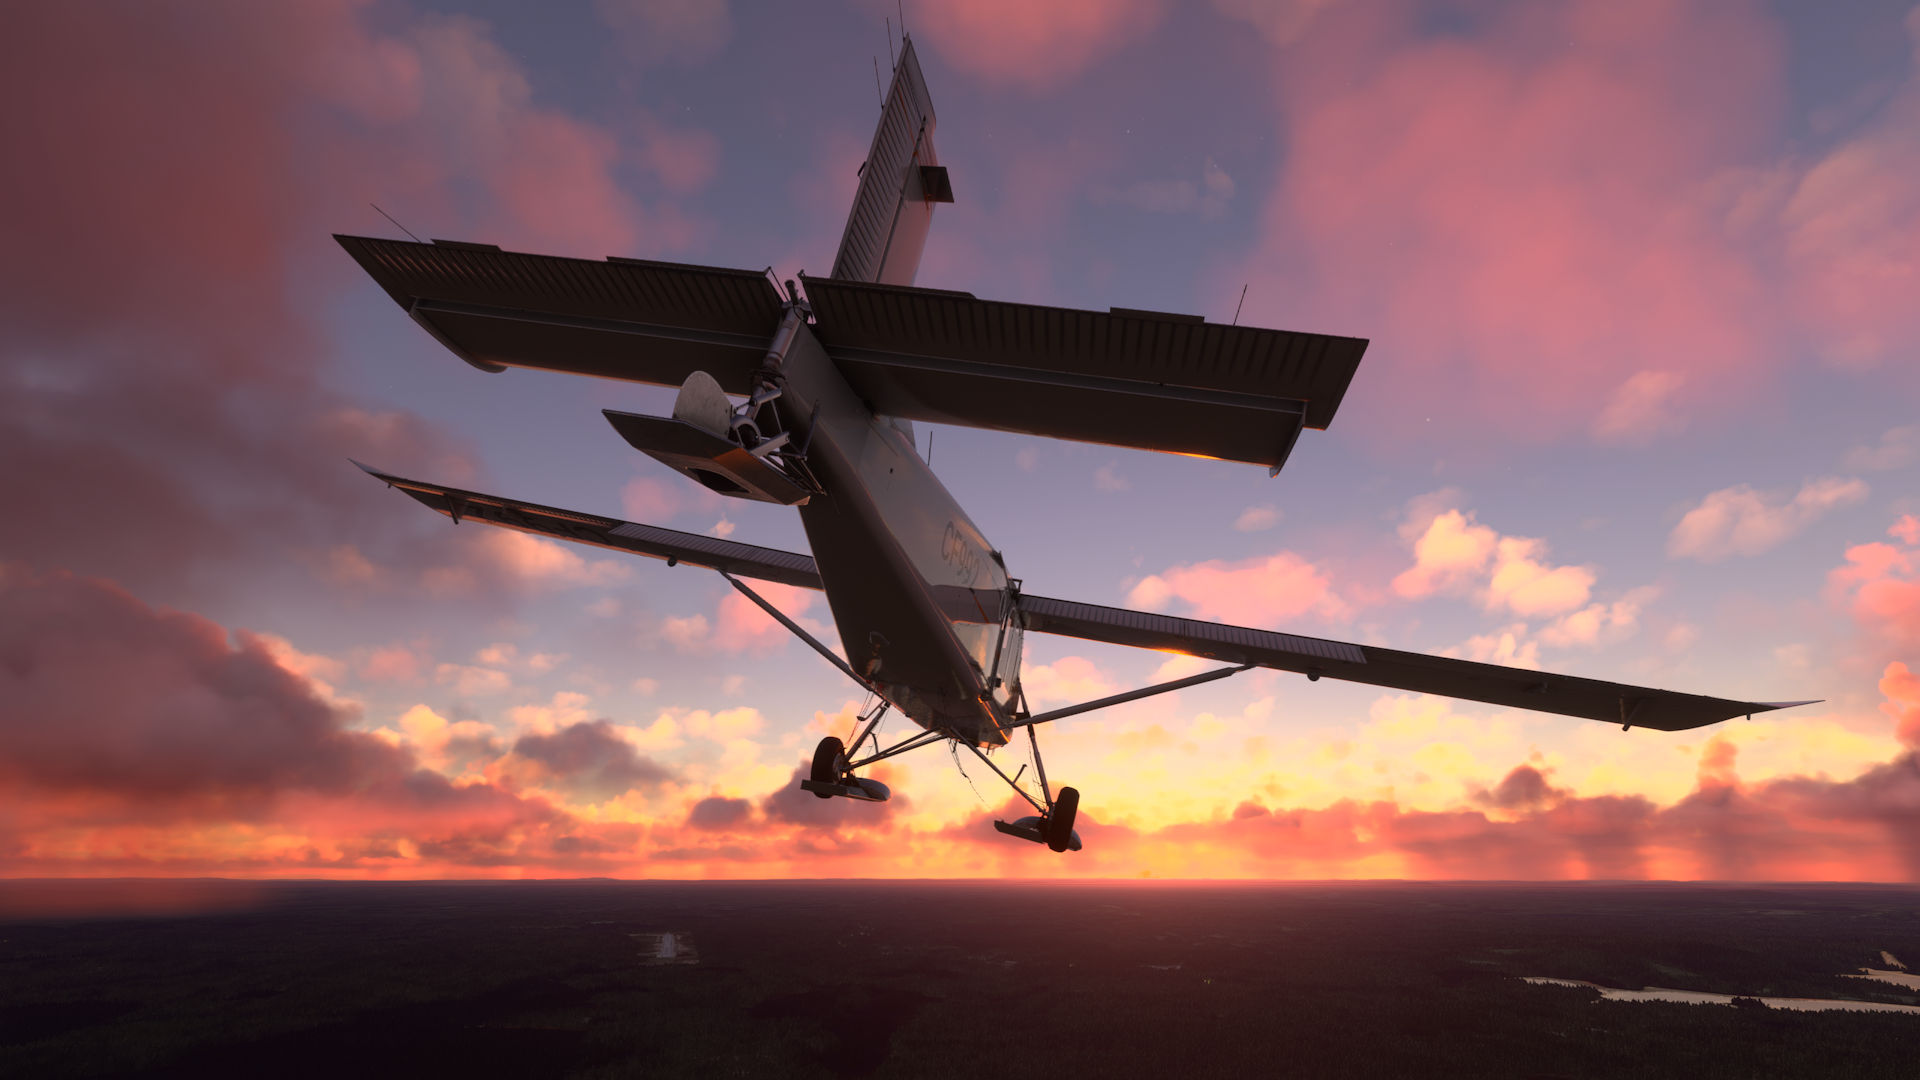 Sunset with a Pilatus on skis | Microsoft Flight Simulator